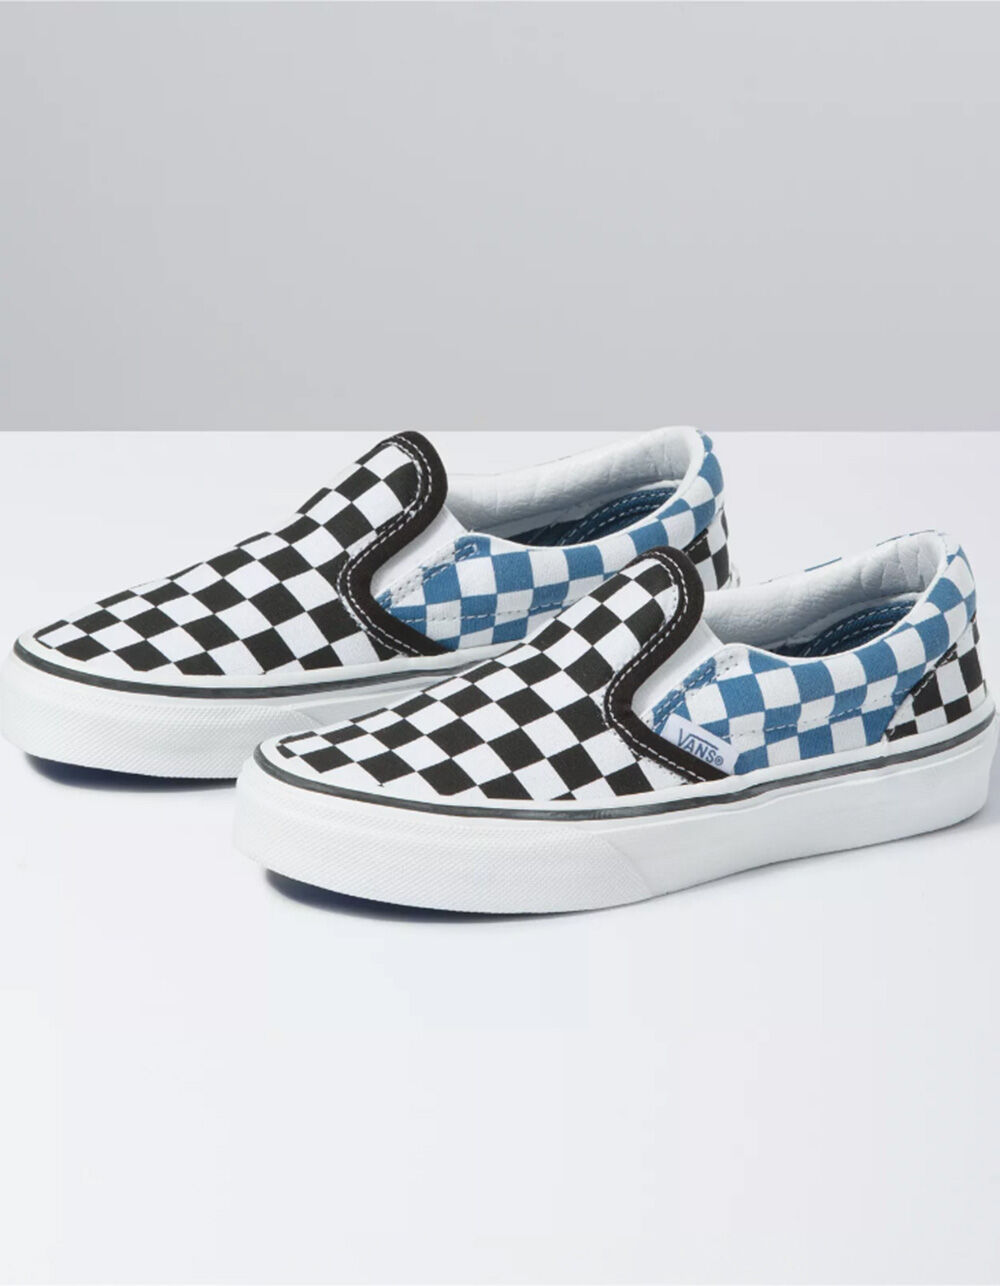 VANS Checkerboard Classic Slip-On Kids Shoes - BLACK/NAVY | Tillys